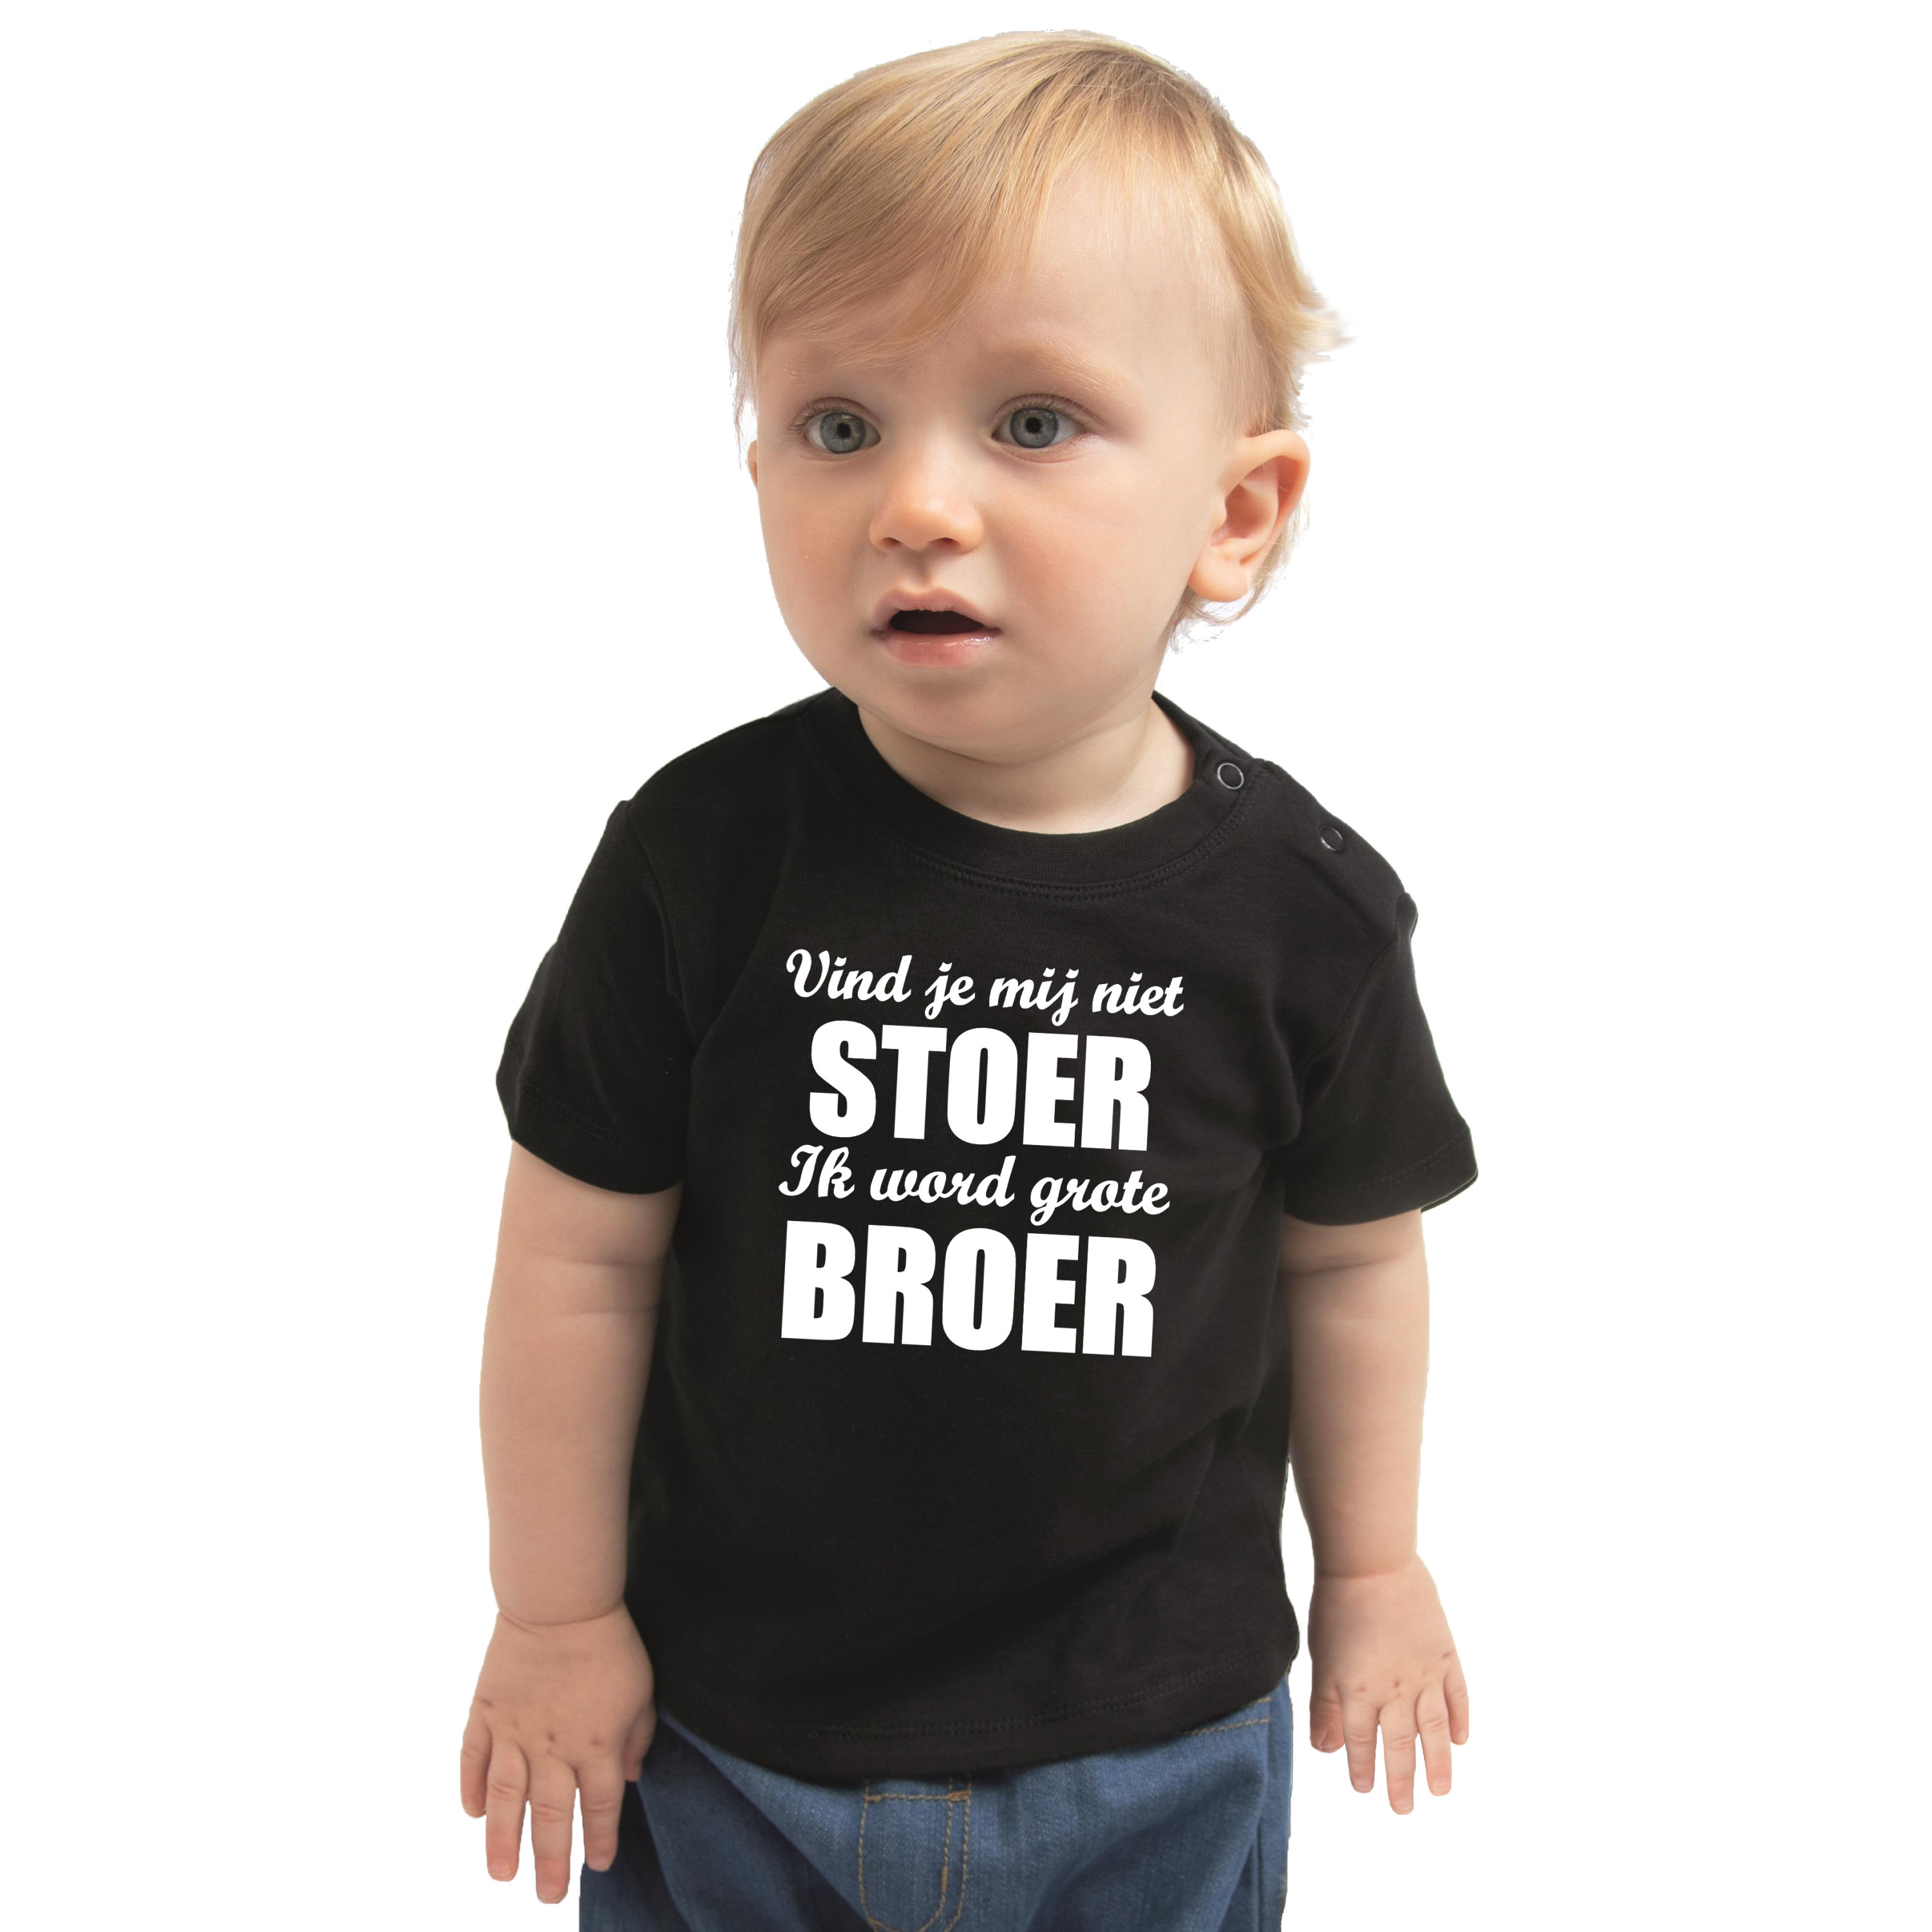 Stoer grote broer cadeau t-shirt zwart peuter/ jongen - Aankodiging zwangerschap grote broer